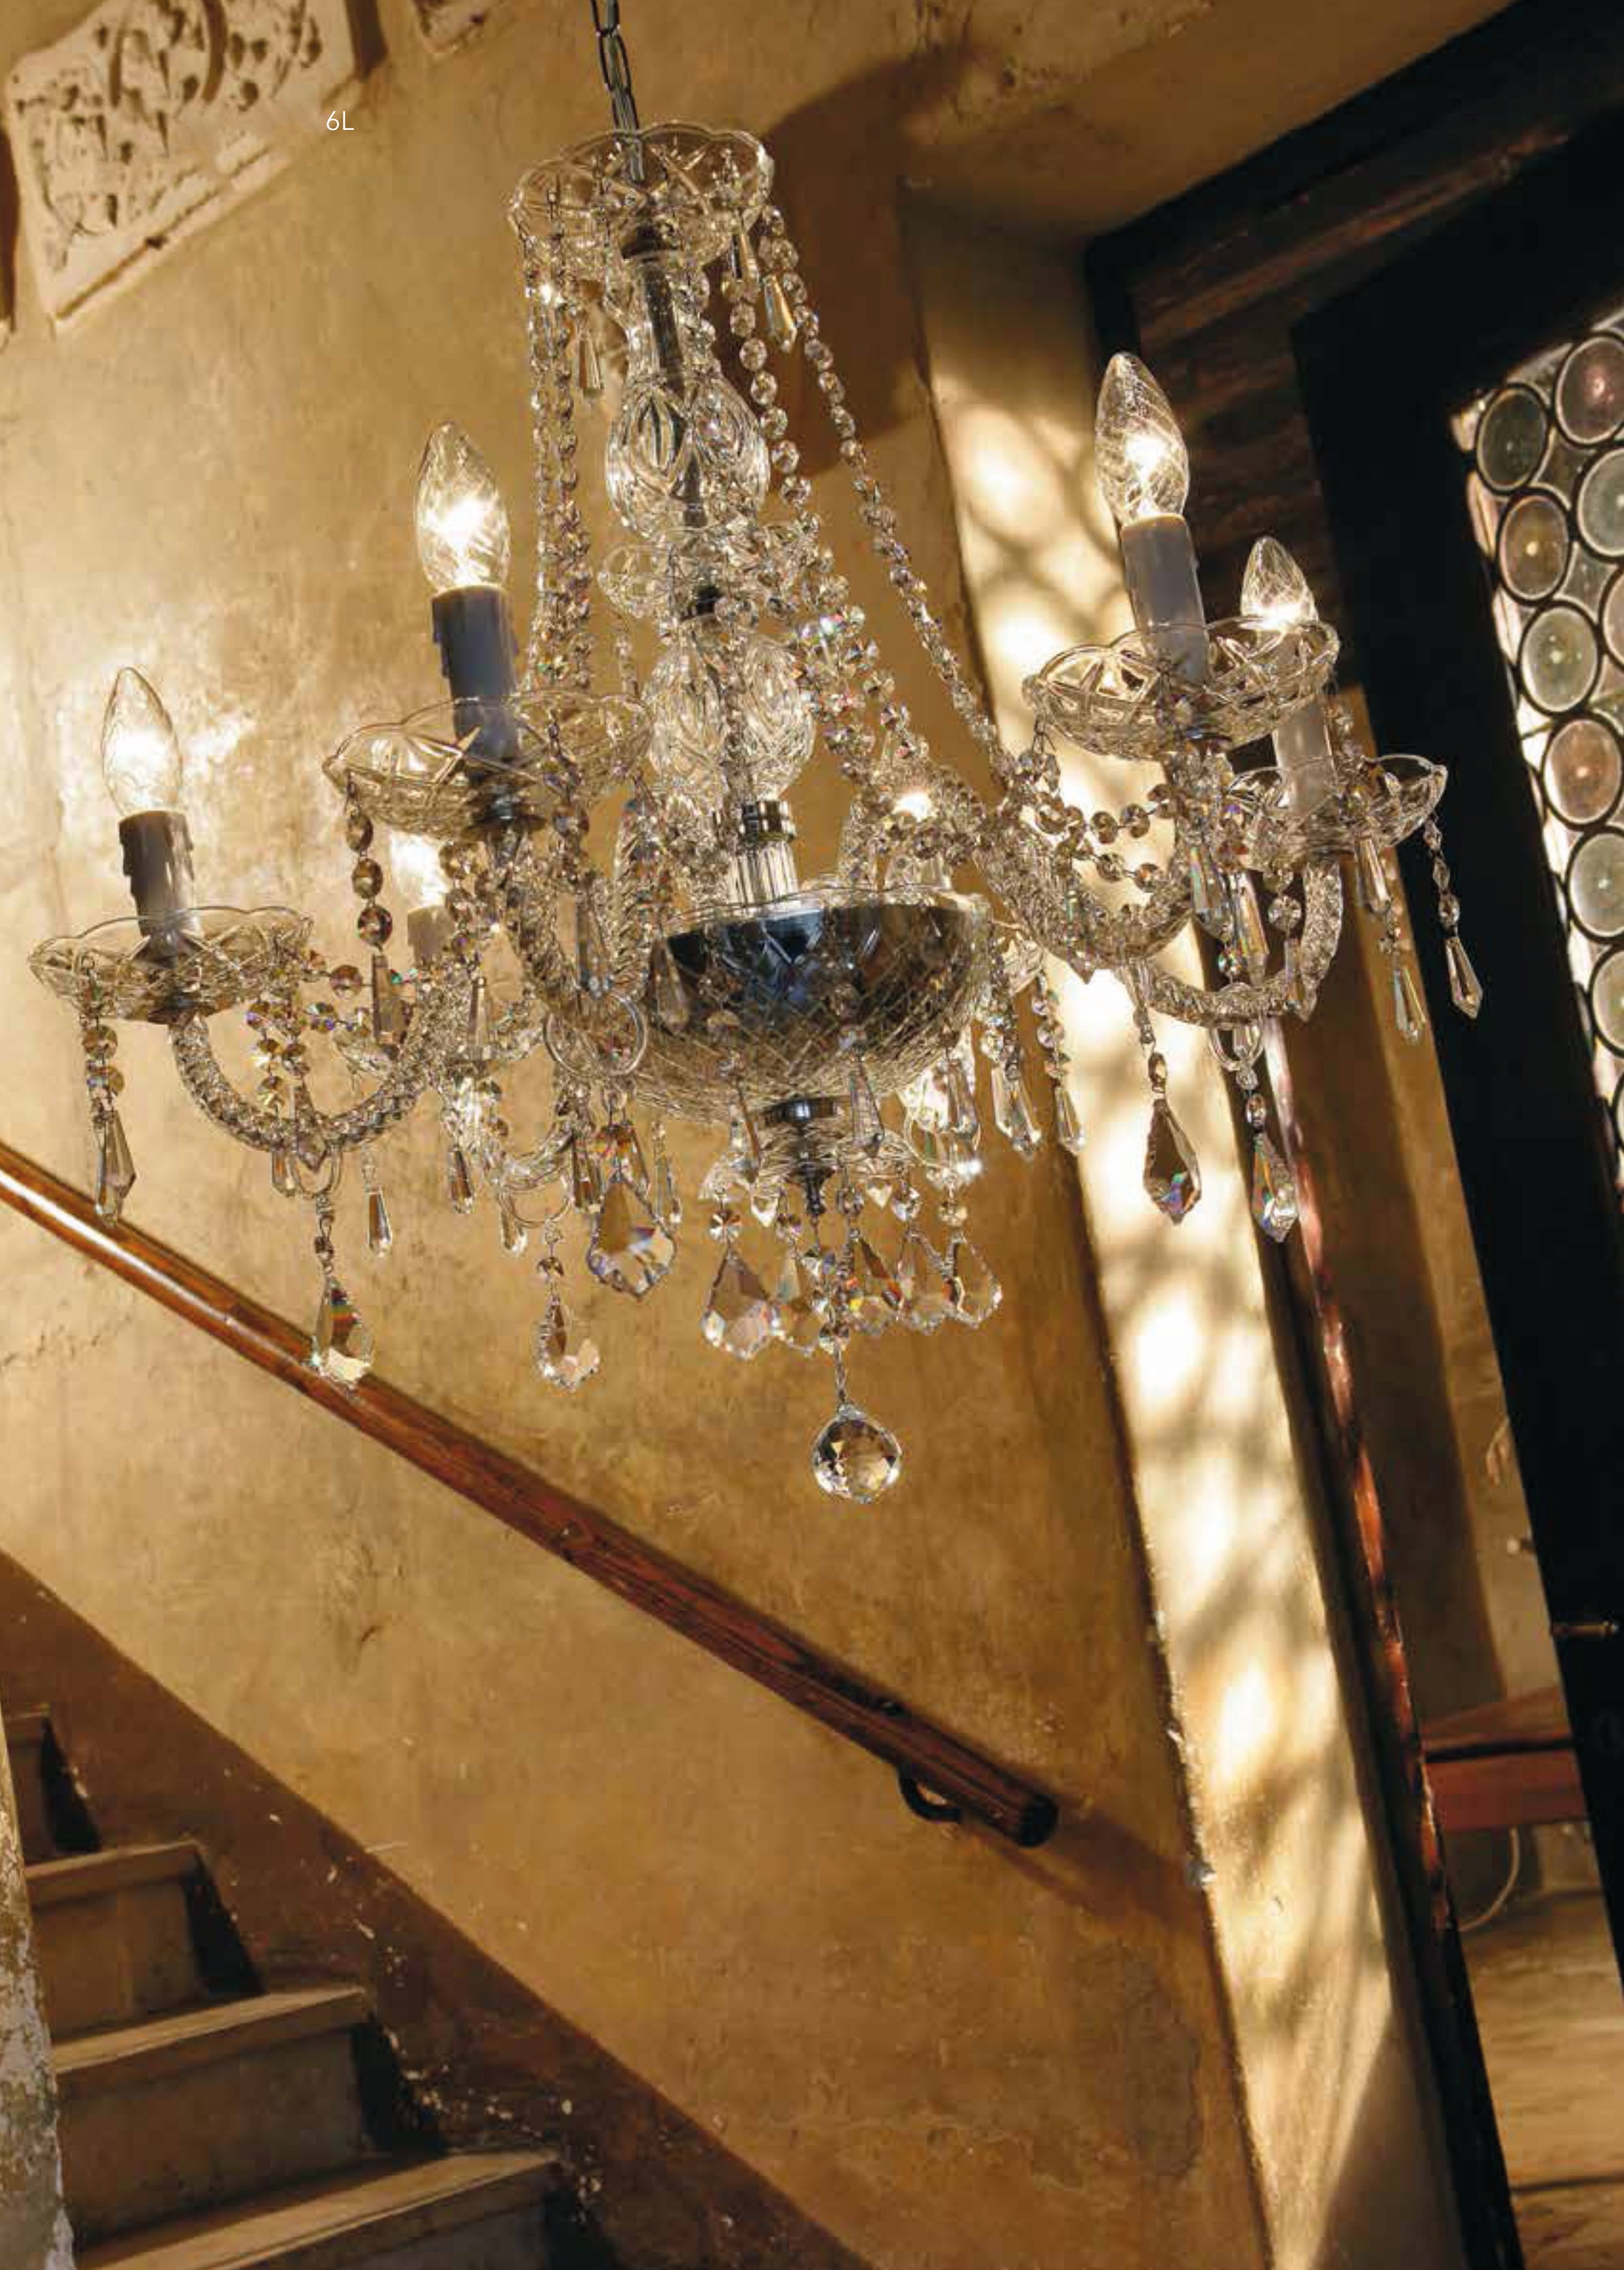 Italian made crystal chandelier #521506